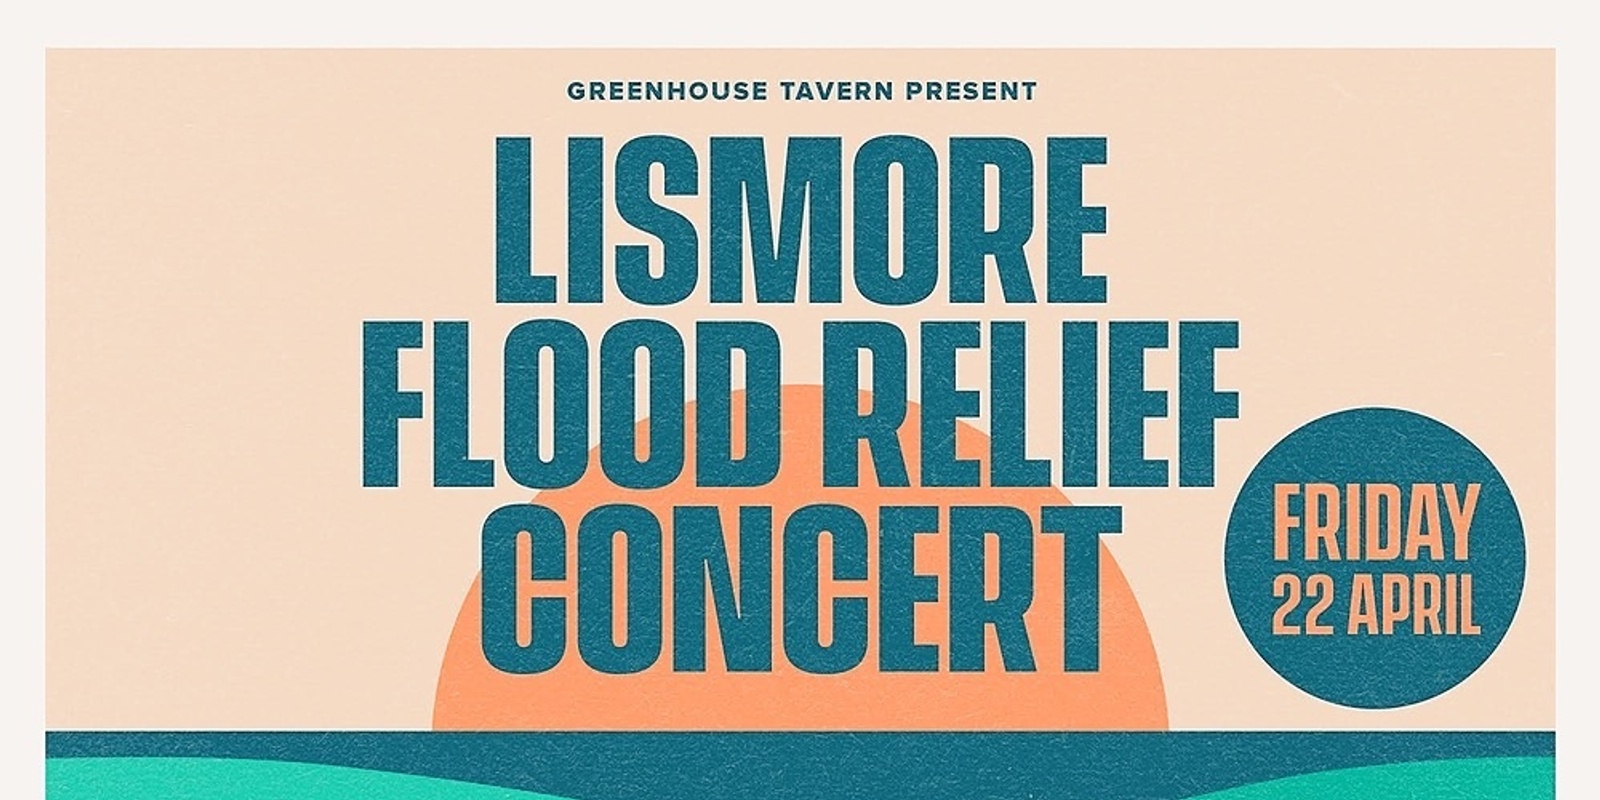 Banner image for GREENHOUSE TAVERN PRESENT LISMORE FLOOD RELIEF CONCERT